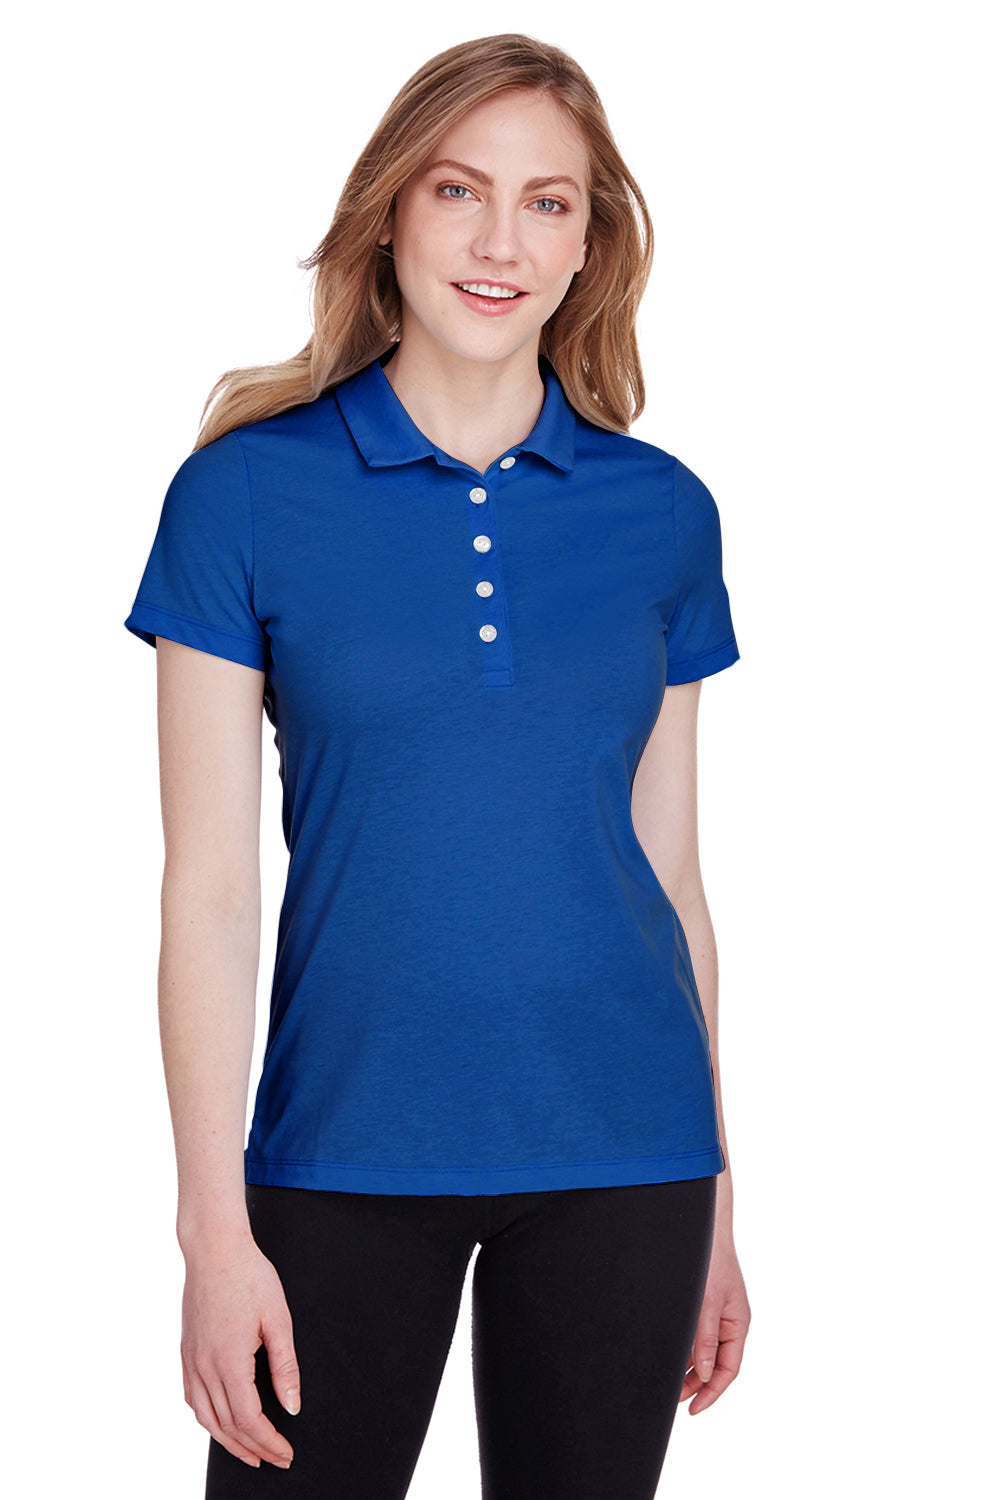 Puma 596921 Womens Fusion Performance Moisture Wicking Short Sleeve Polo Shirt Royal Blue Front